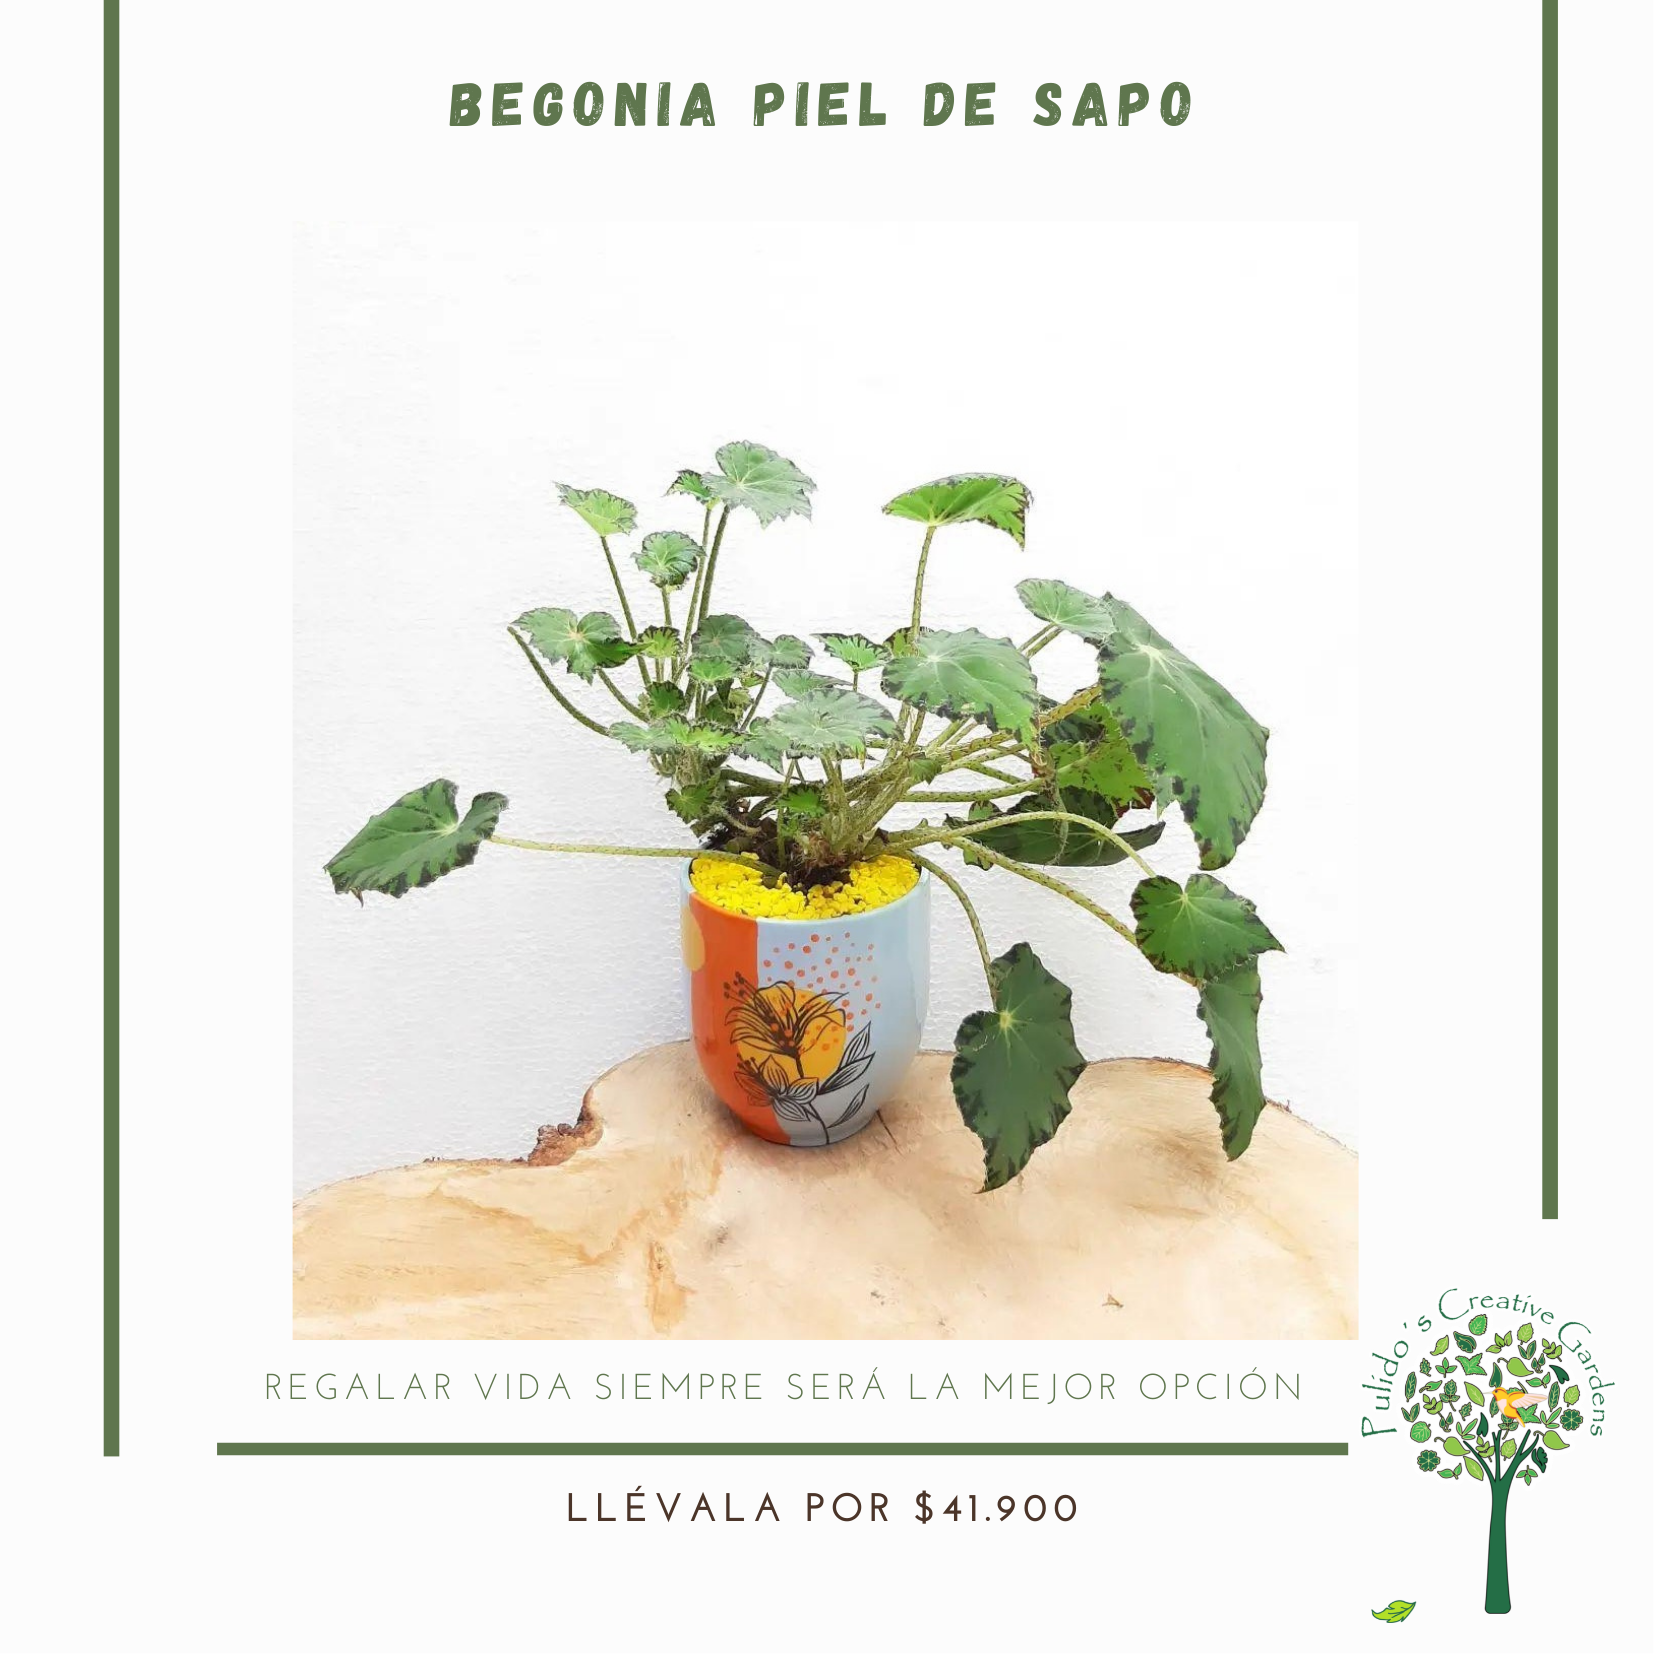 Begonia piel de sapo – Pulidos Creative Gardens